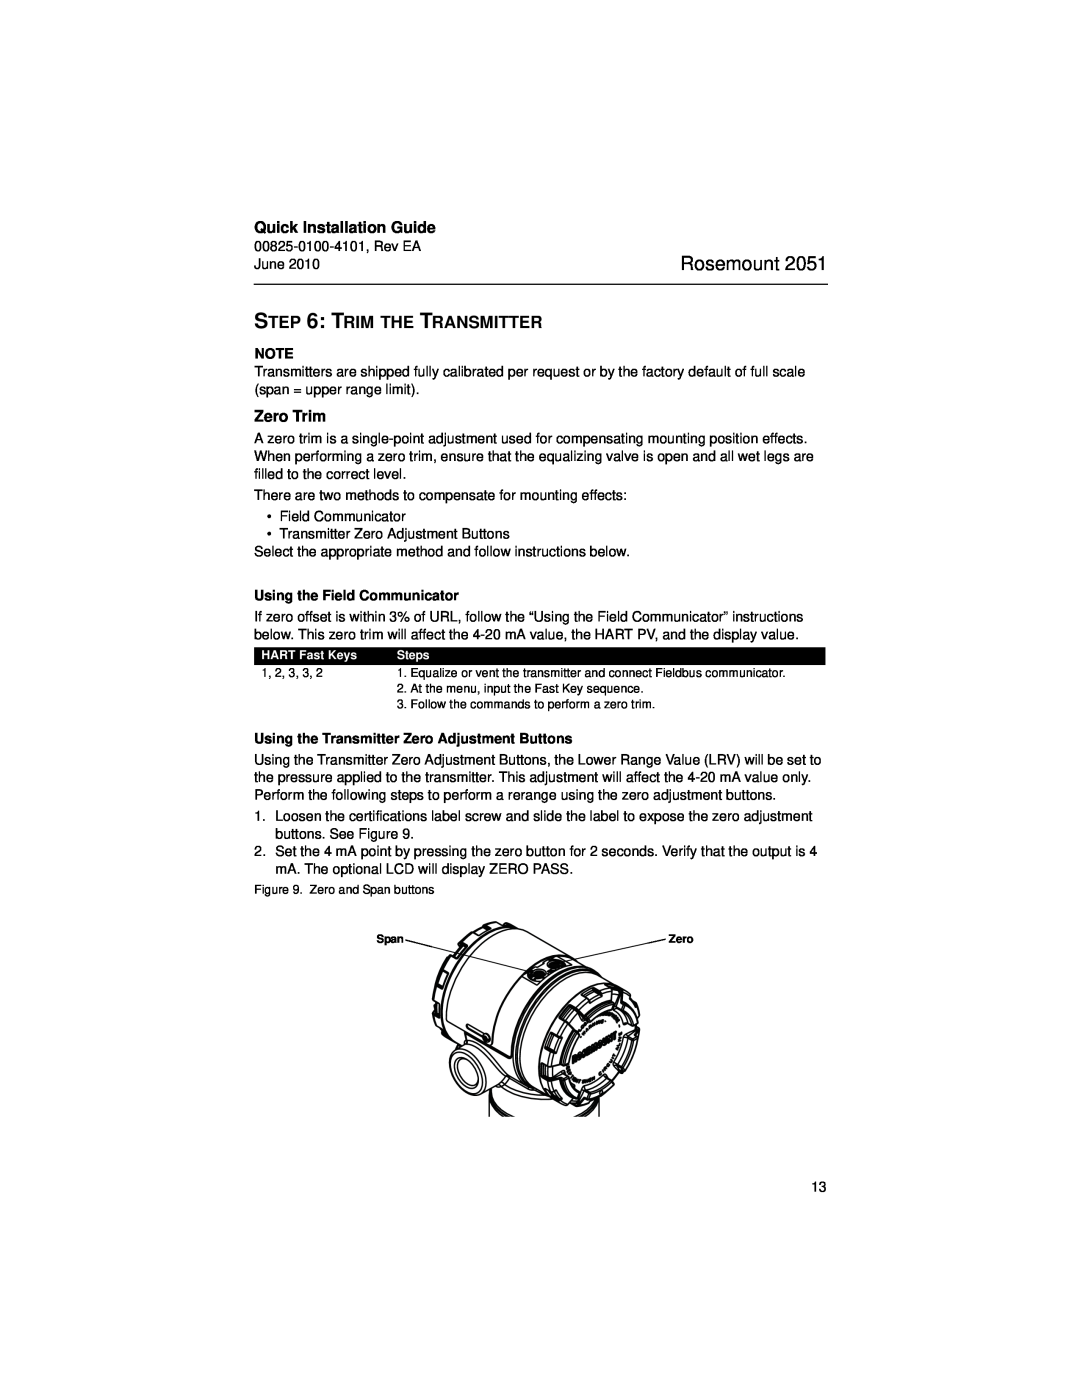 Emerson Process Management 2051CF manual Rosemount, Trim The Transmitter, Quick Installation Guide, Zero Trim 